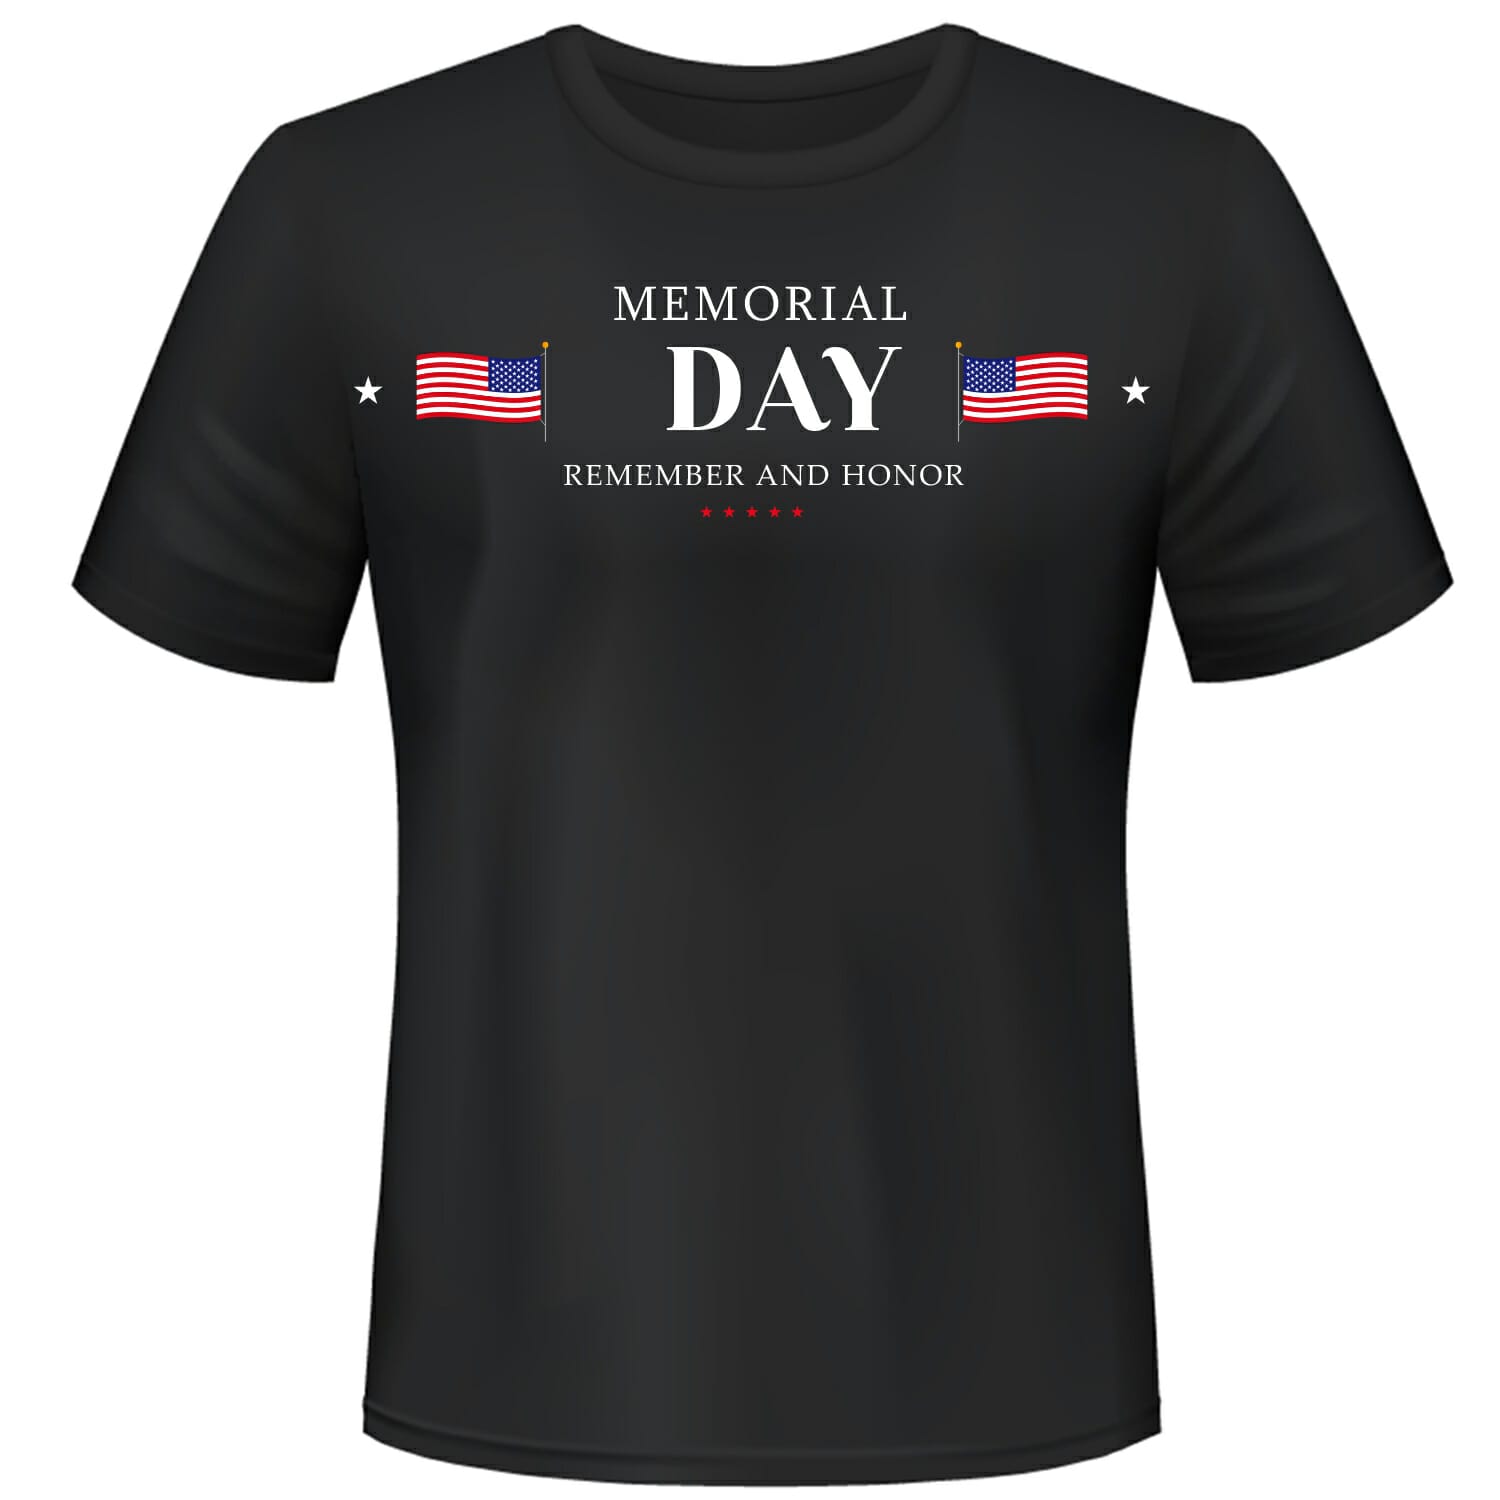 Memorial Day tshirt design